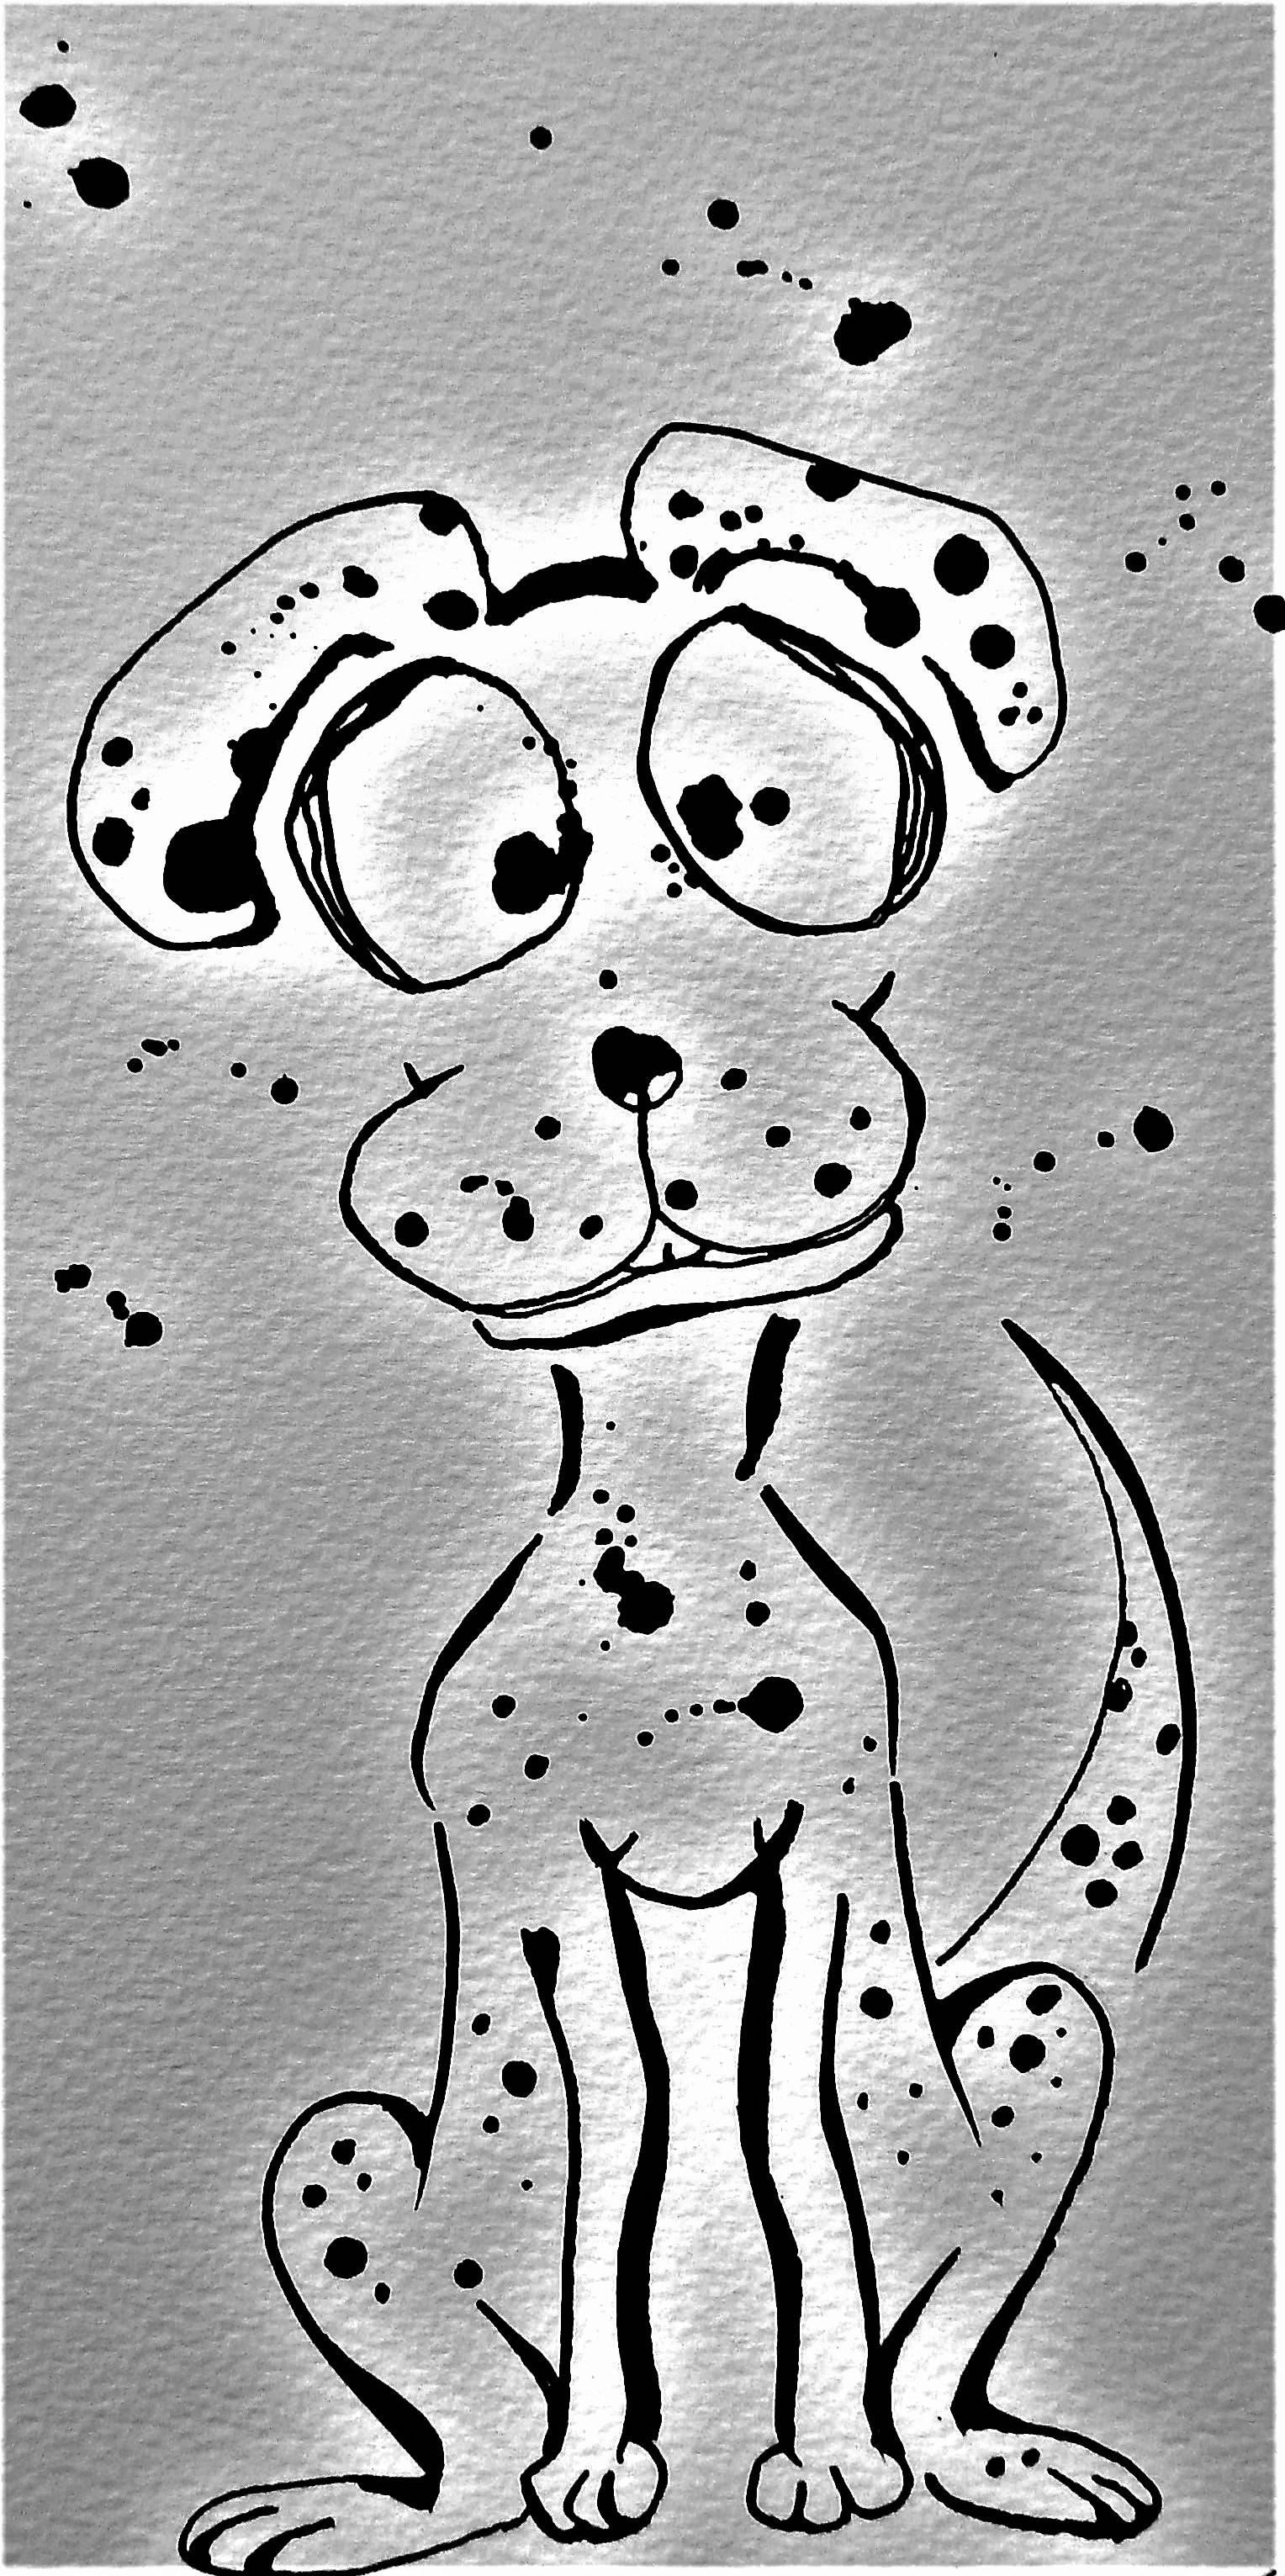 Dotty The Dog Cartoon by Kitty Pigfish - Pigfish